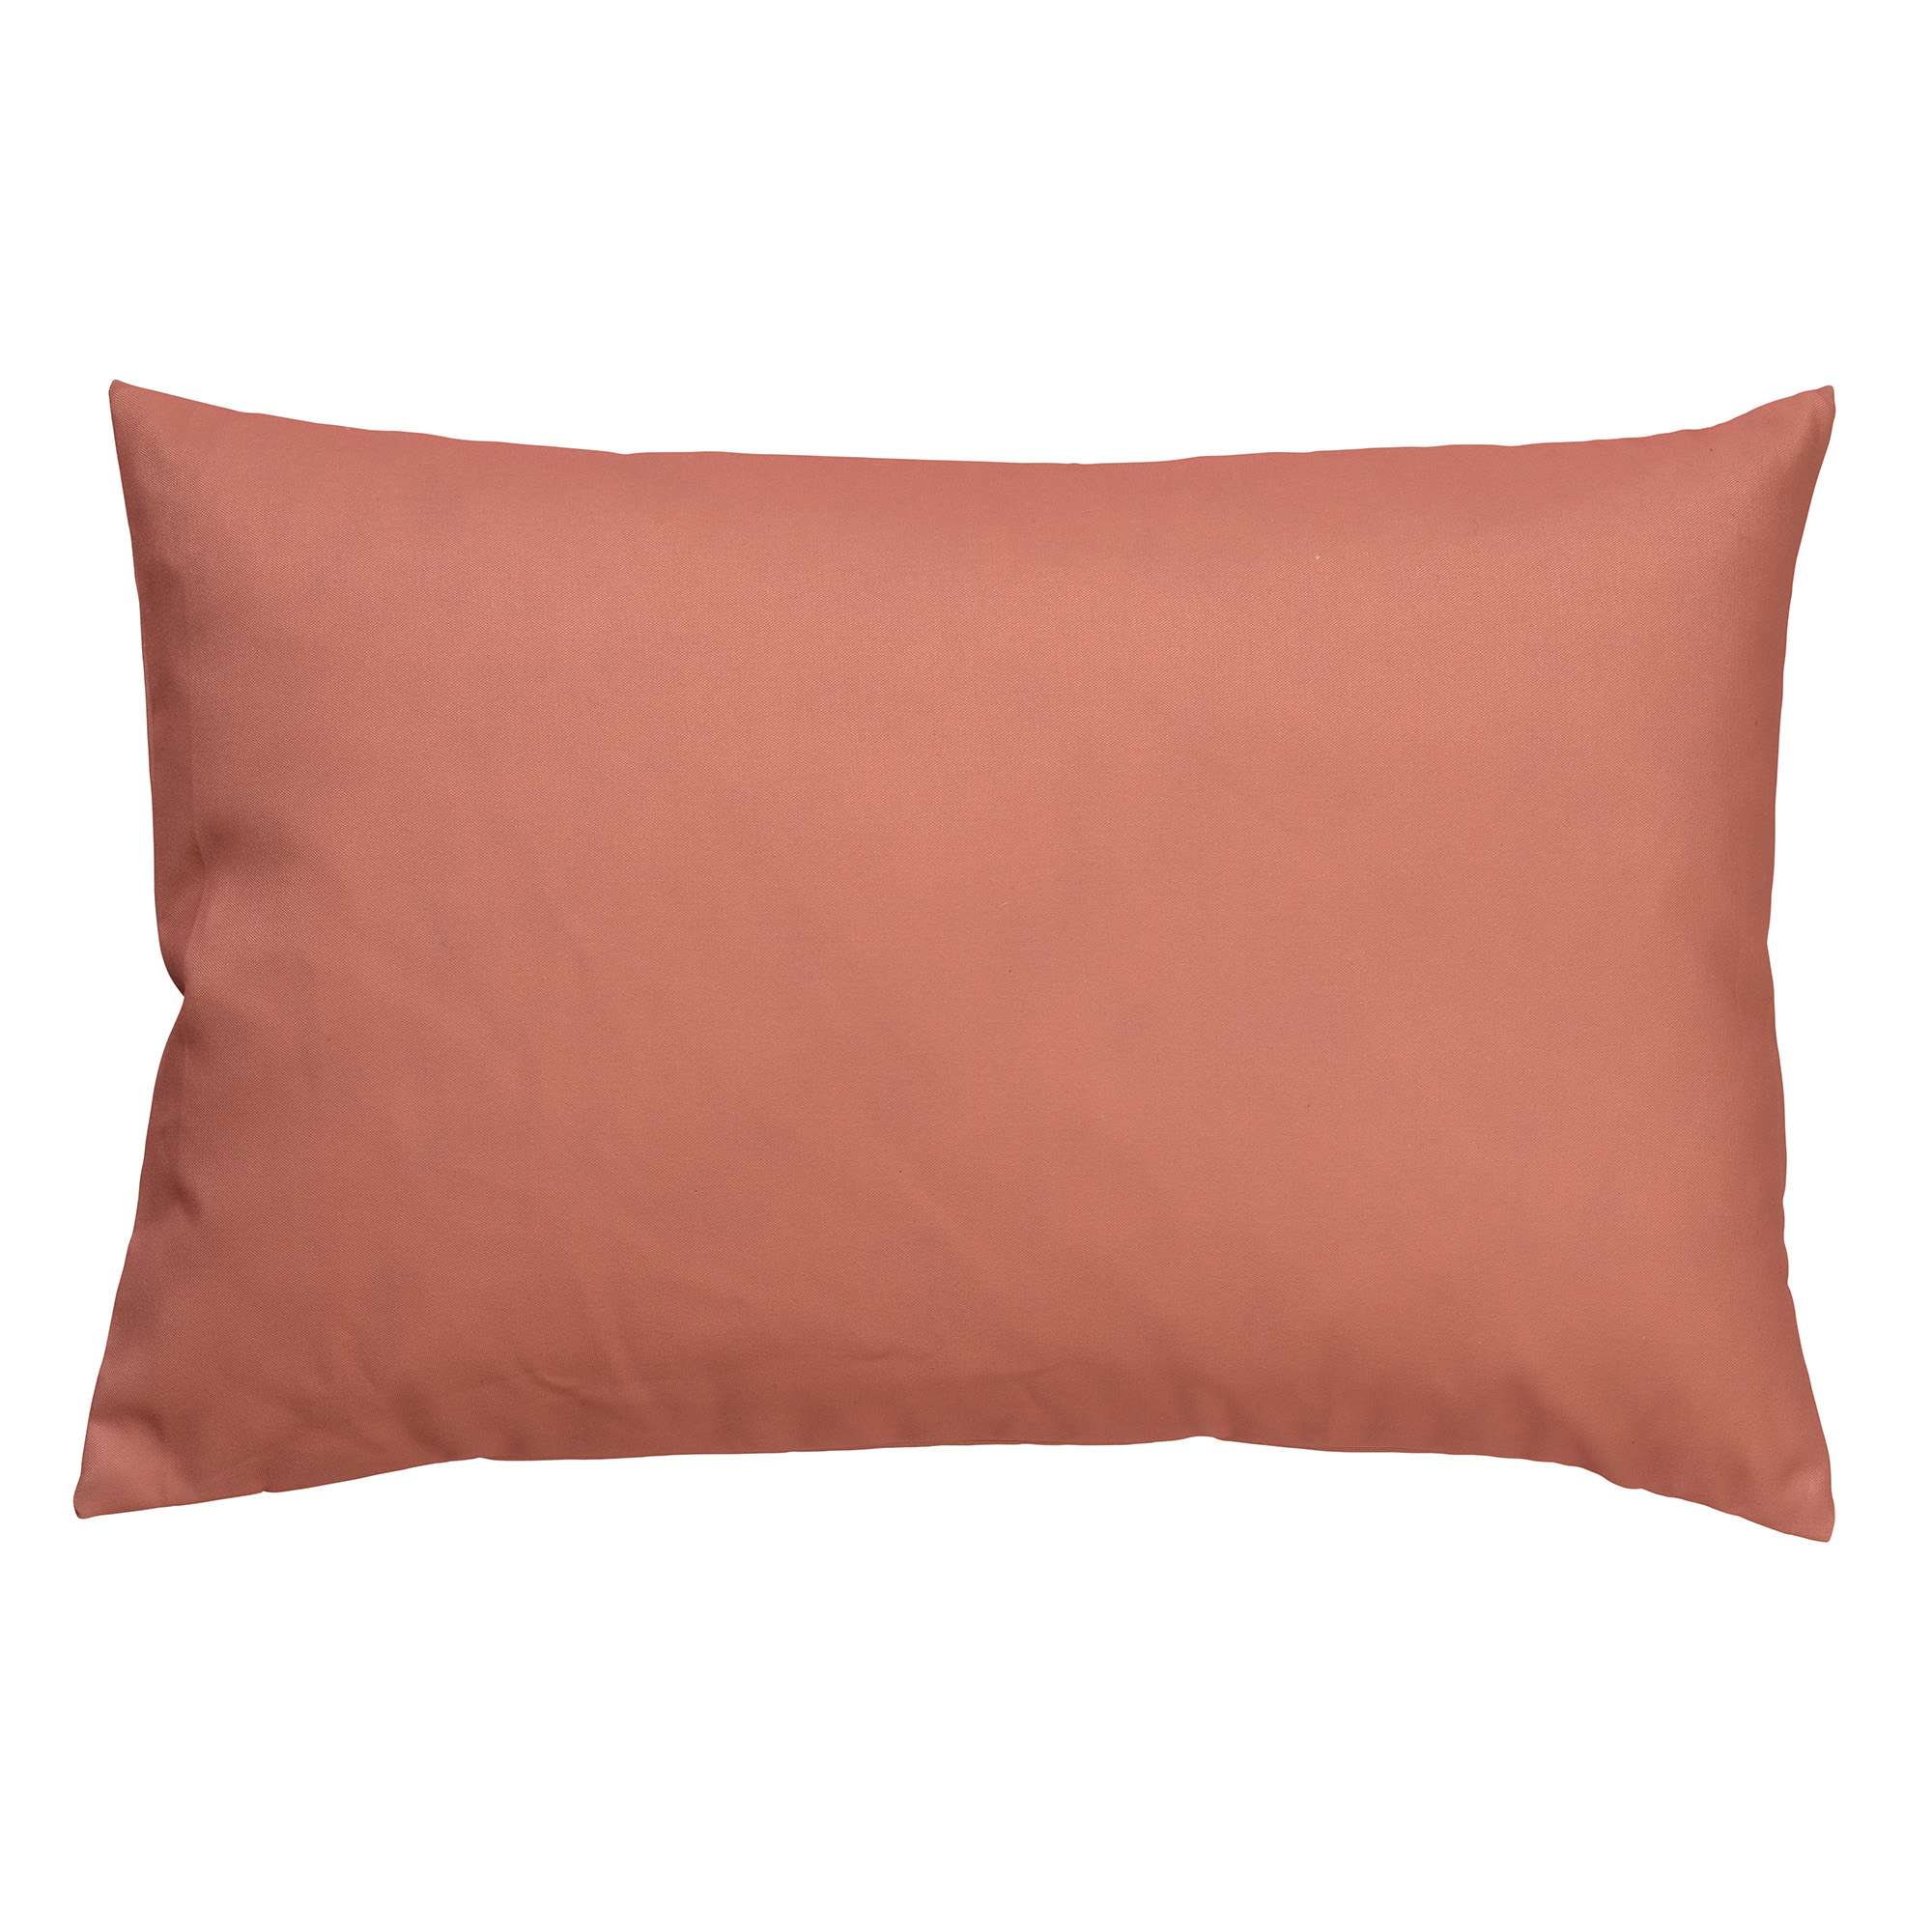 SANTORINI - Cushion 40x60 cm Muted Clay - pink